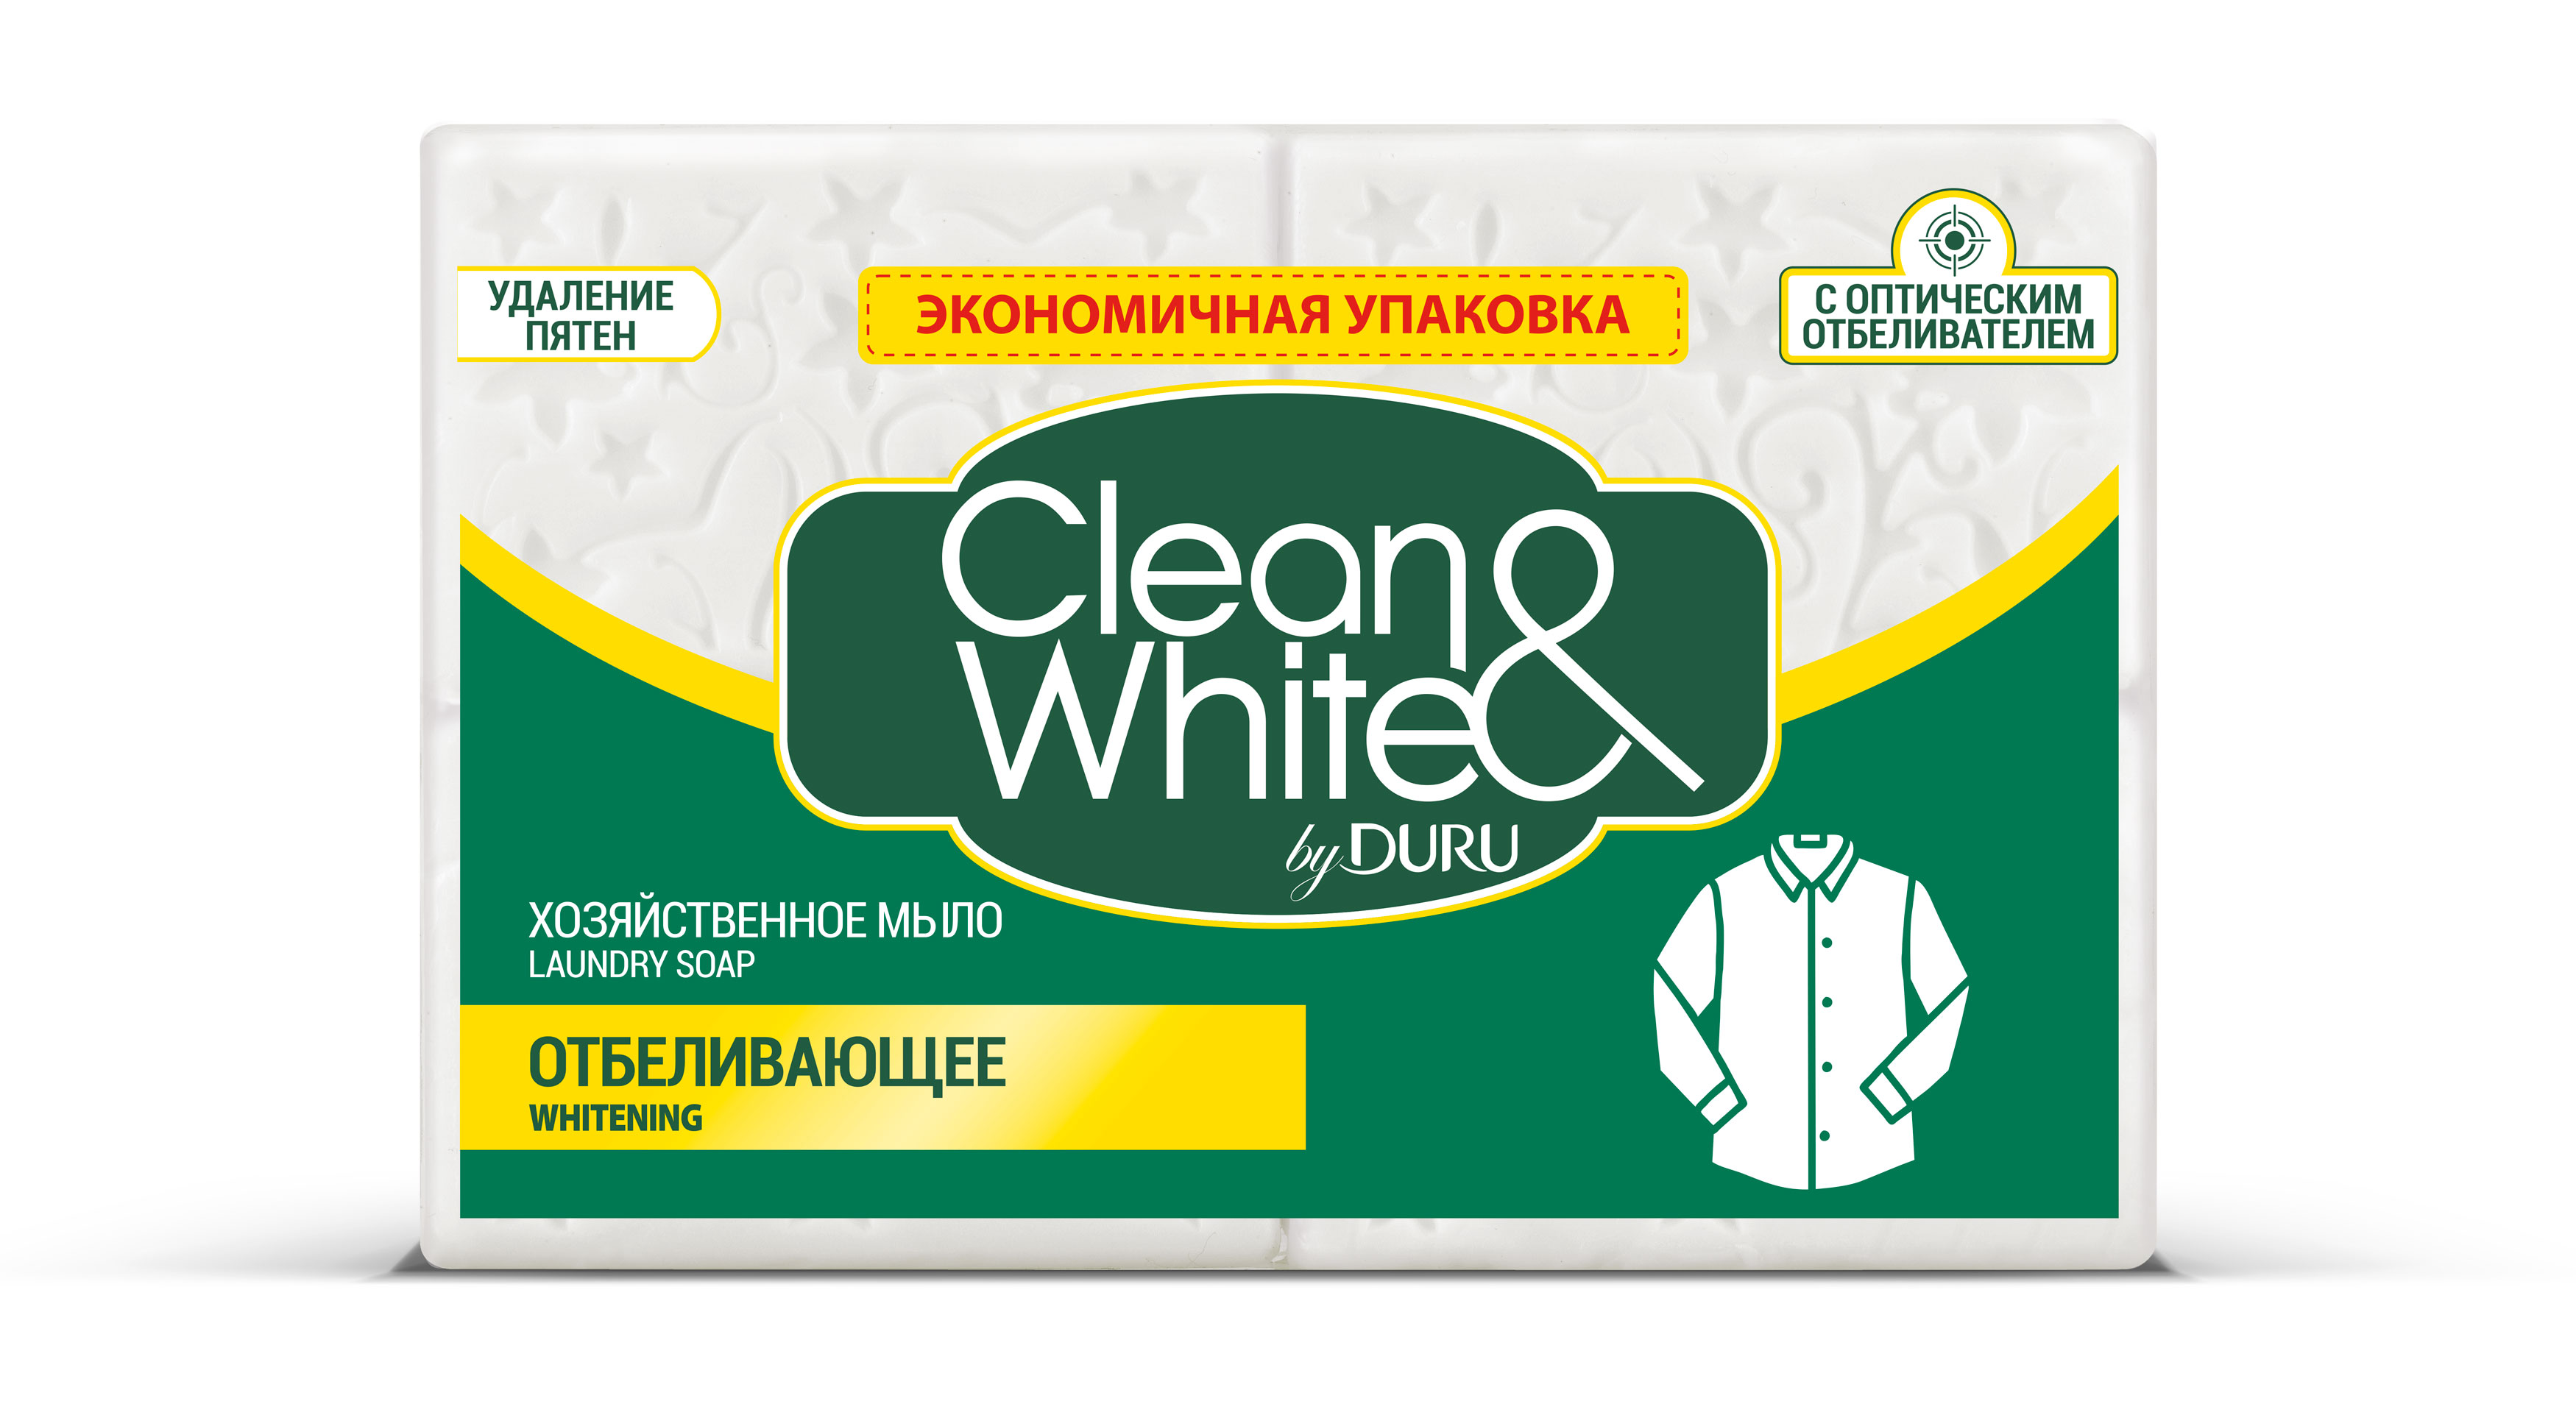 Мыло хозяйственное Clean & White by Duru отбеливающее, 4x120 г